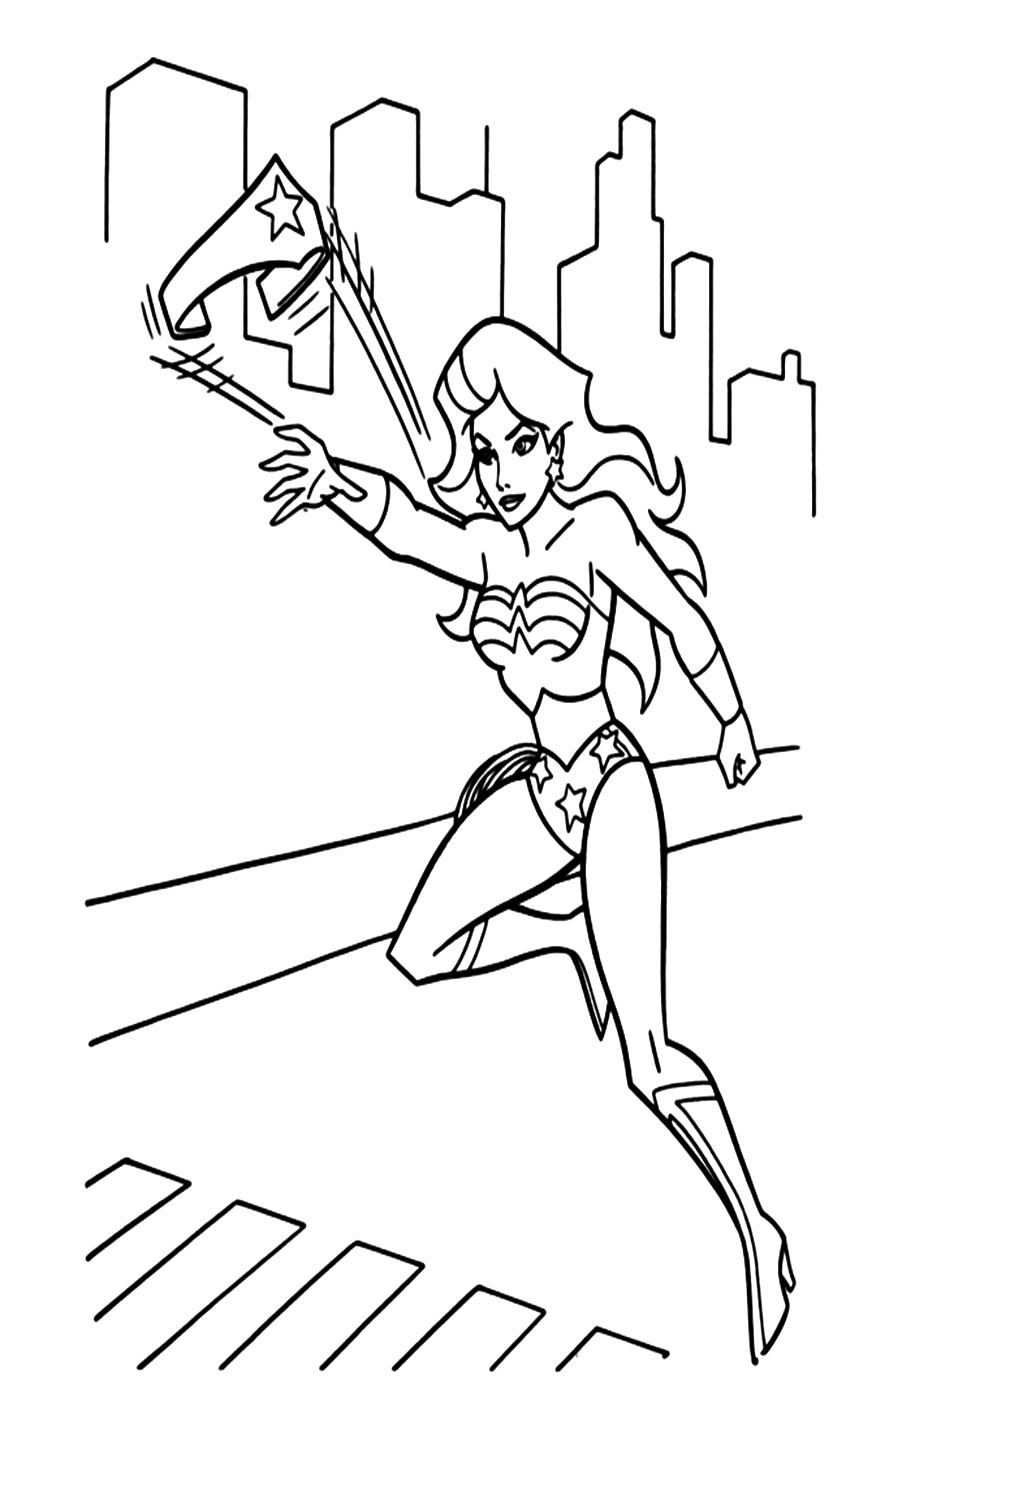 Free Printable Wonder Woman Coloring Pages